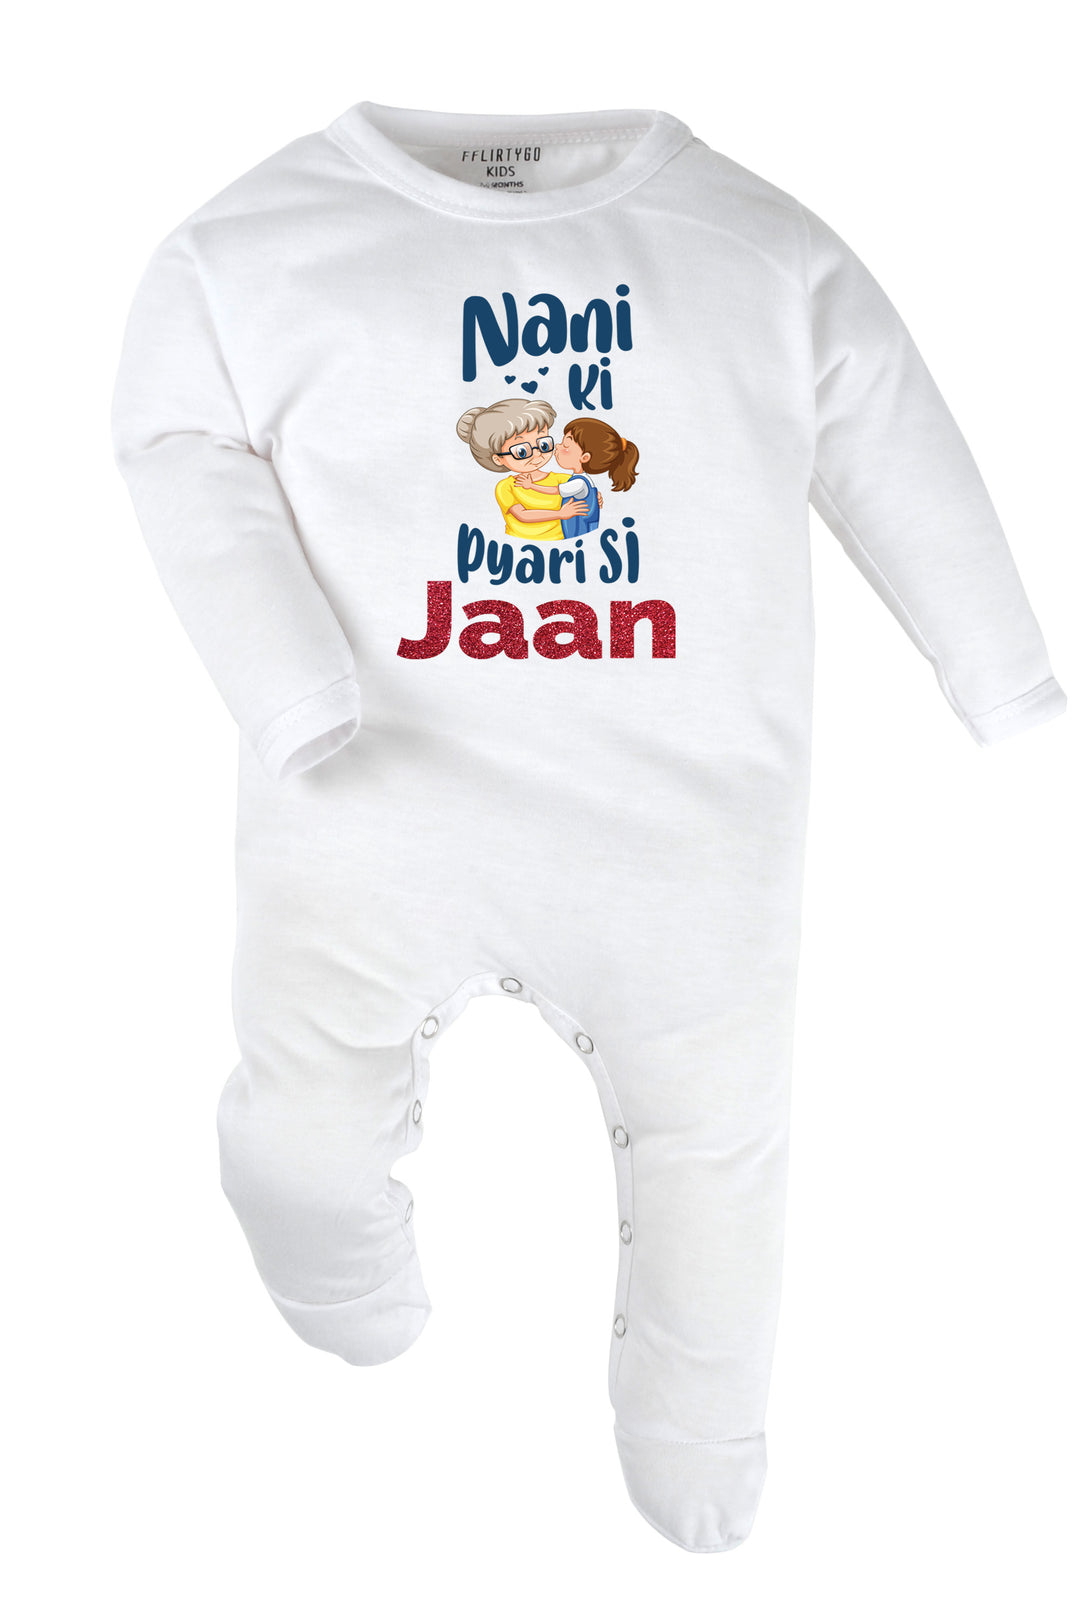 Nani Ki Pyari Si Jaan Baby Romper | Onesies